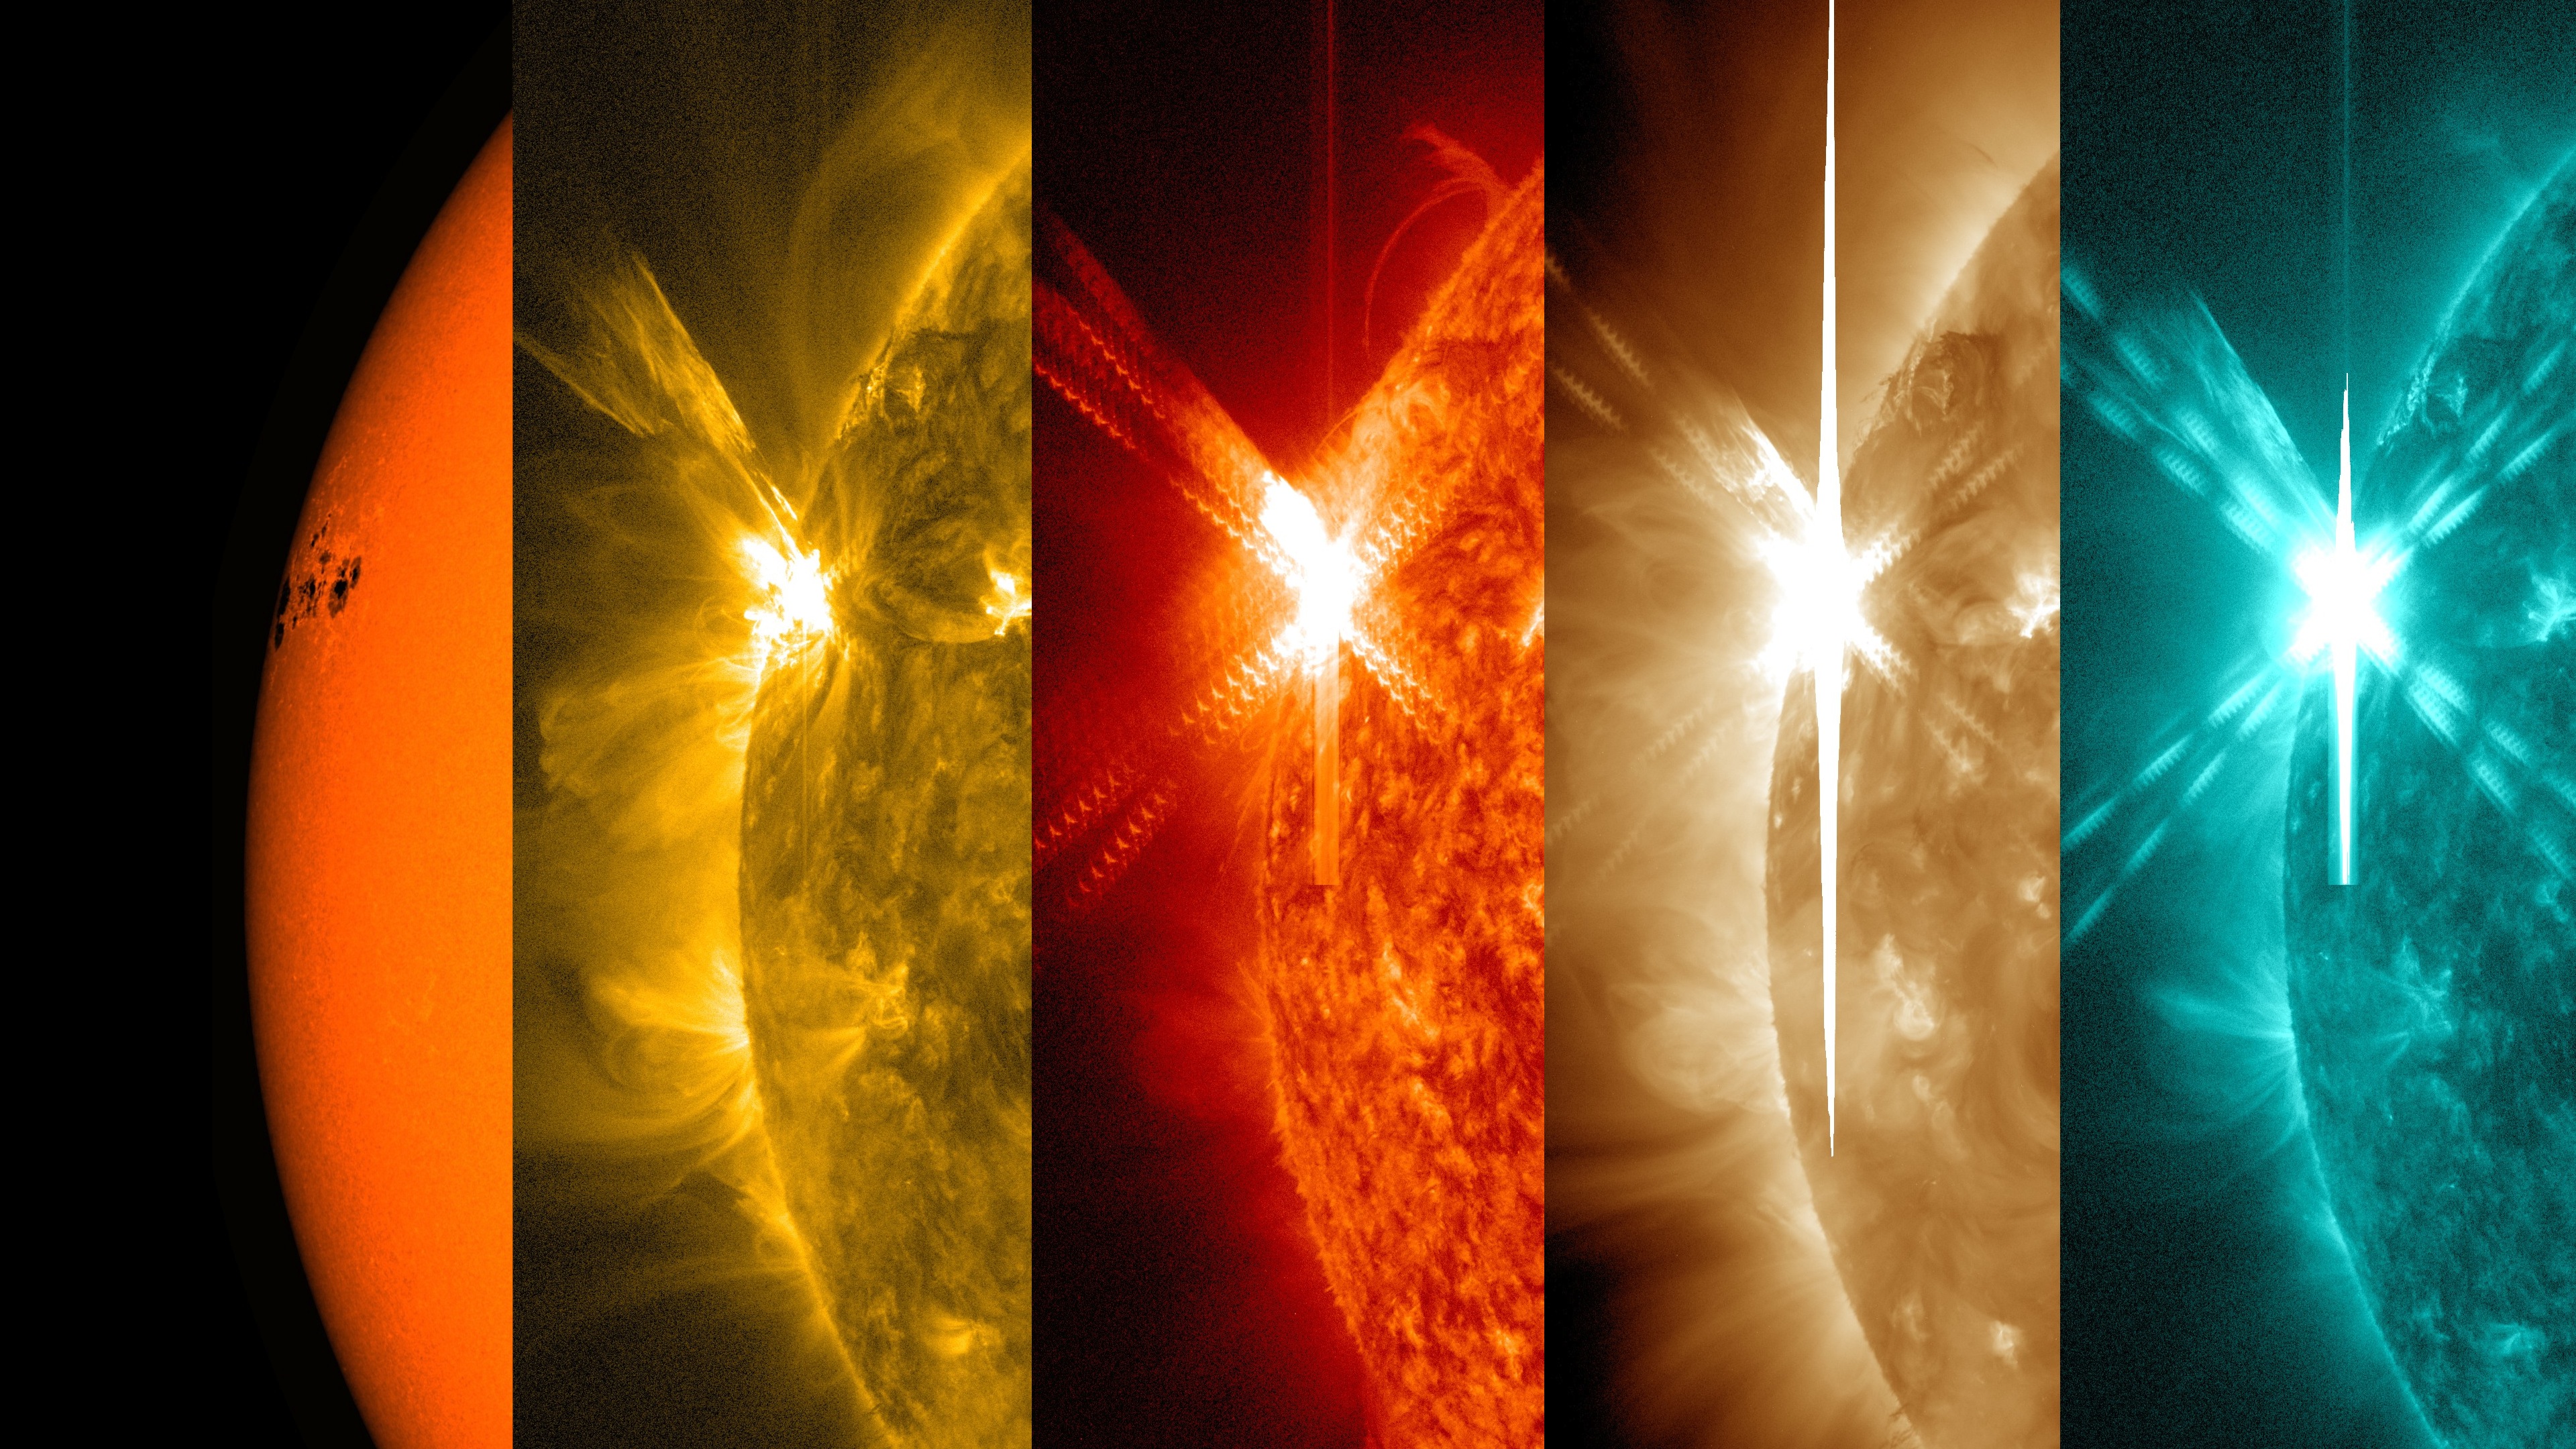 Sun emits huge solar flare, burst of plasma CBS News